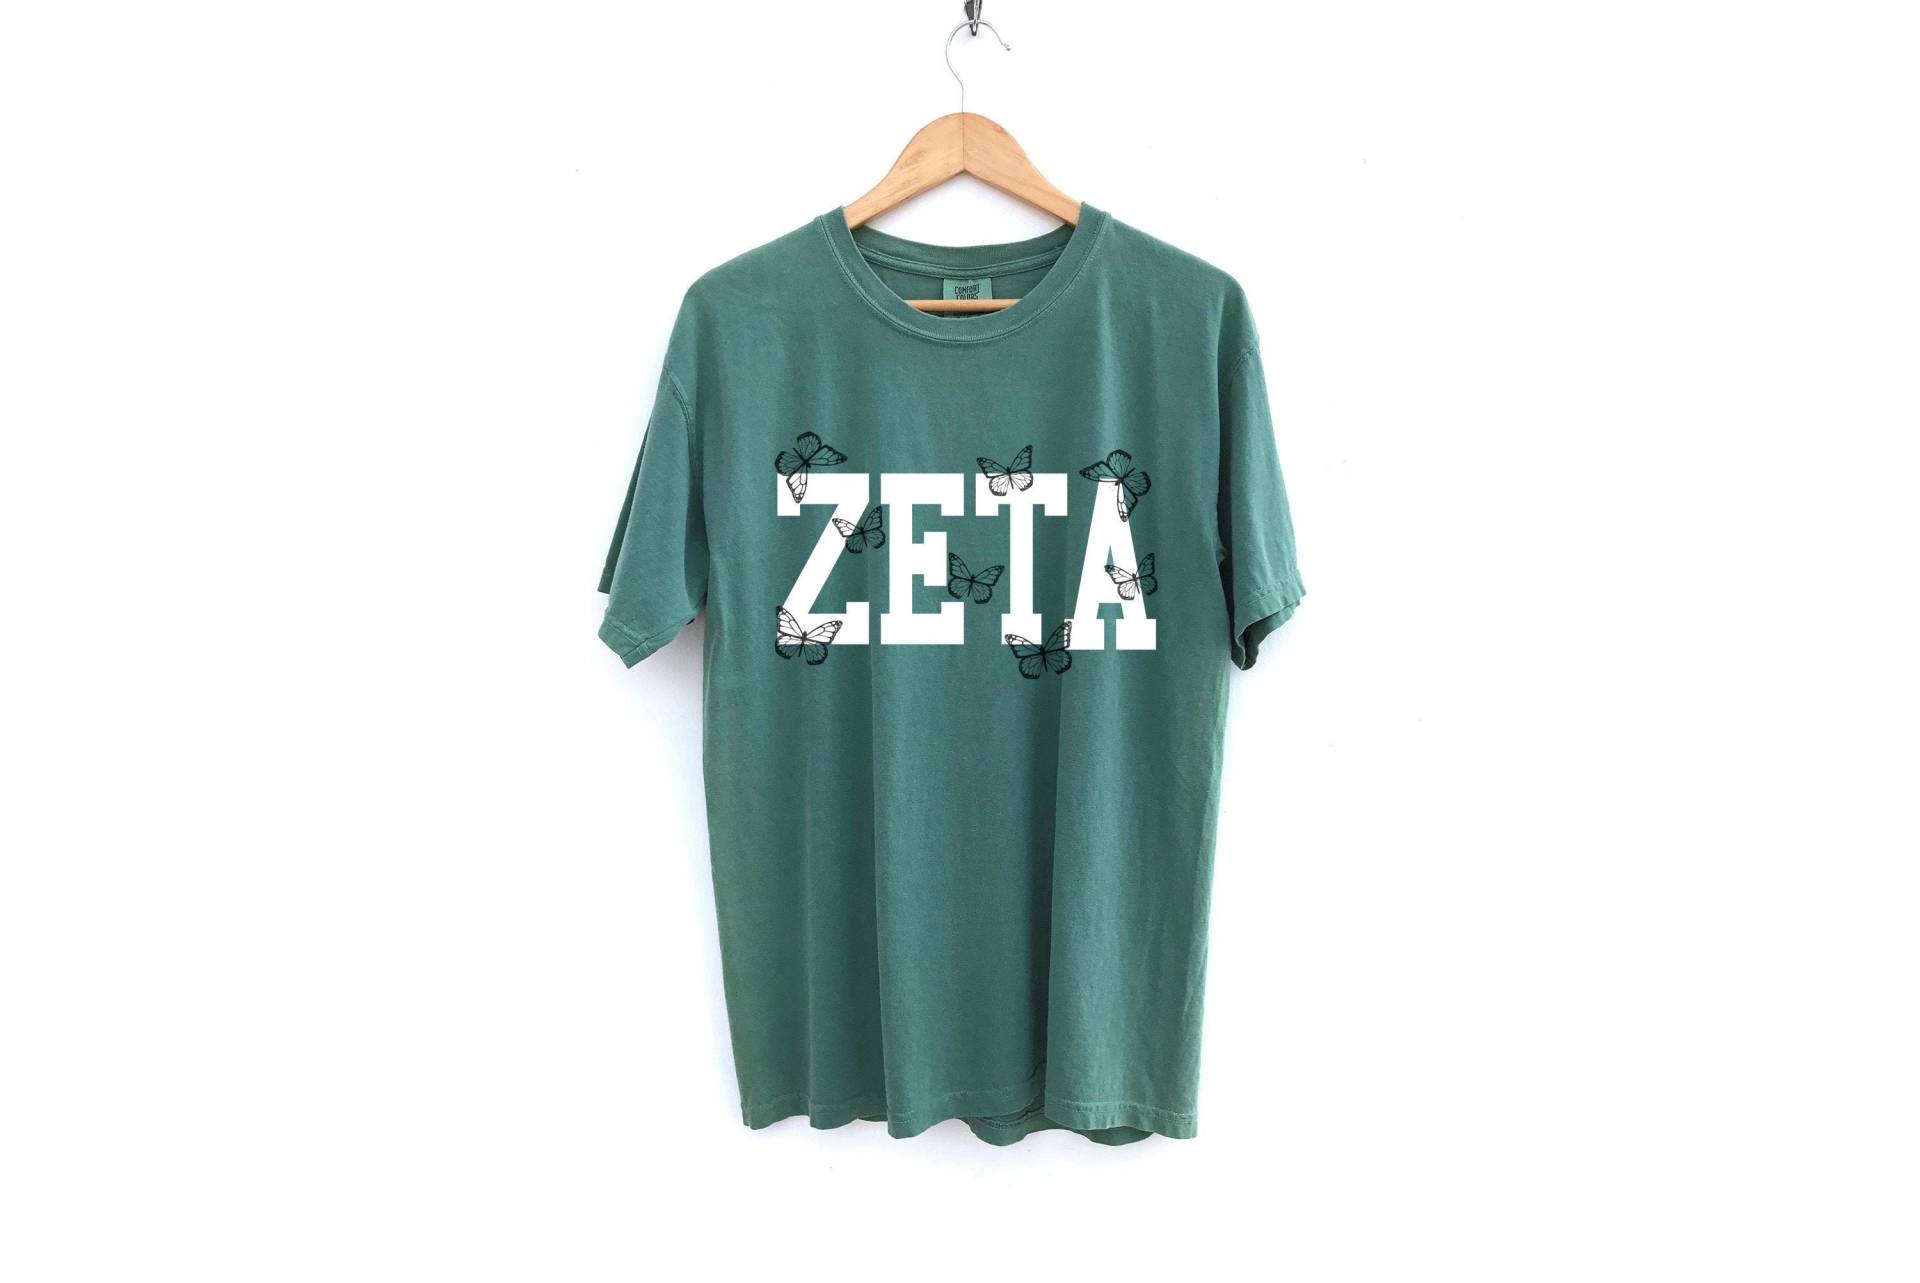 Zeta Tau Alpha/Zta The Keely Butterfly Sorority Shirt Comfort Colors Weitere Farben Verfügbar von MadebyMollzShop